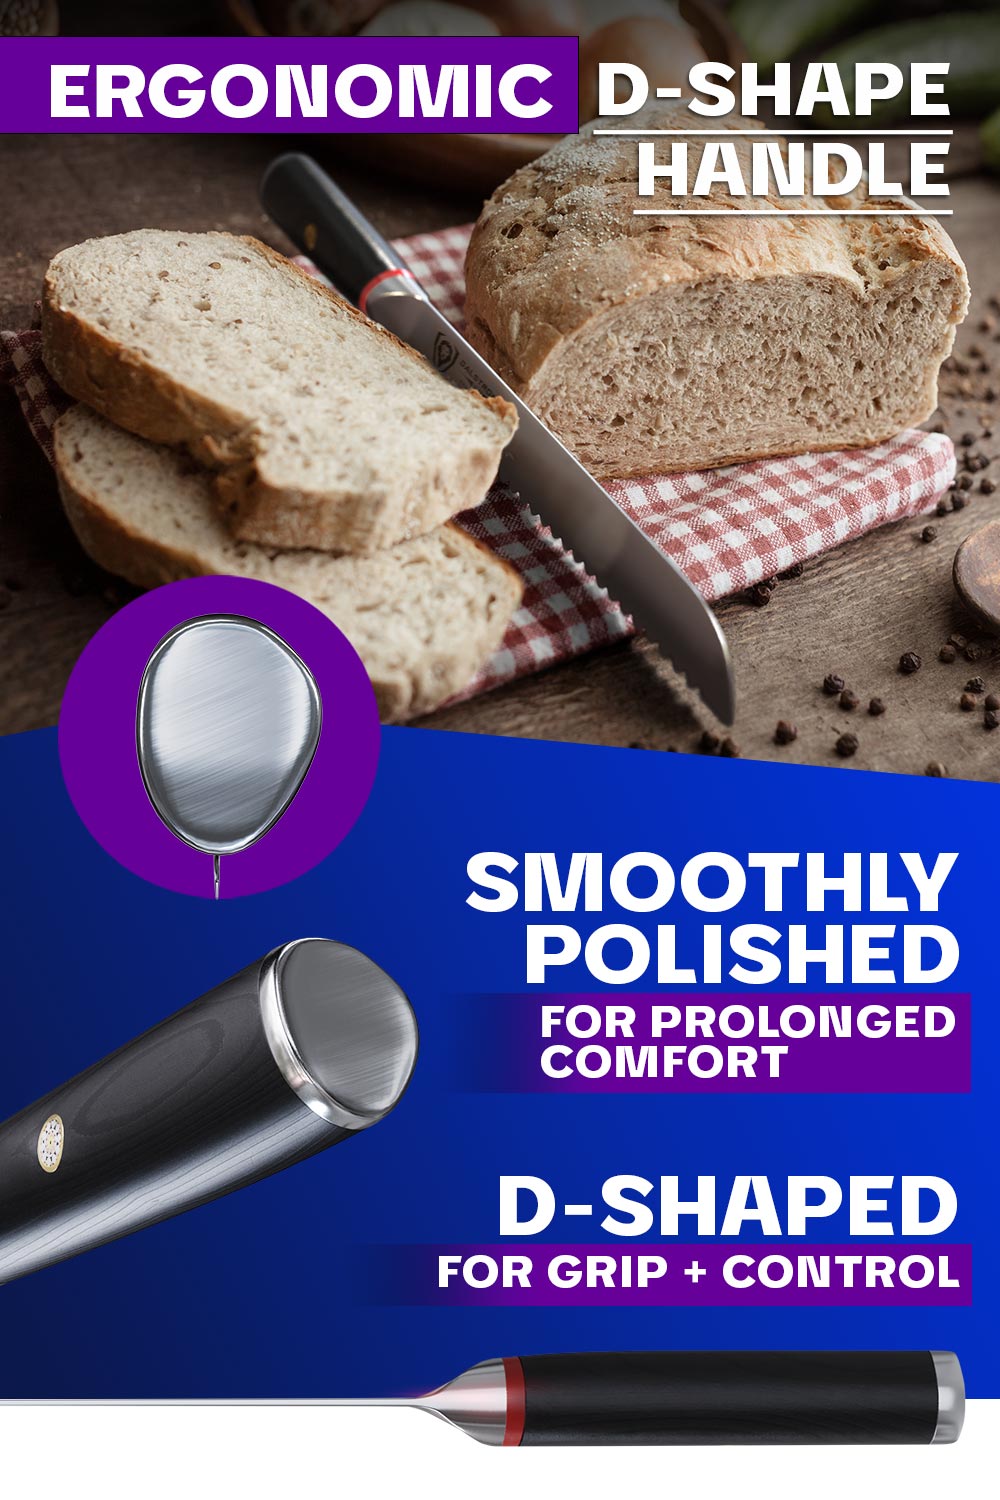 Dalstrong phantom series 9 inch serrated bread knife featuring it's ergonomic pakka wood handle.